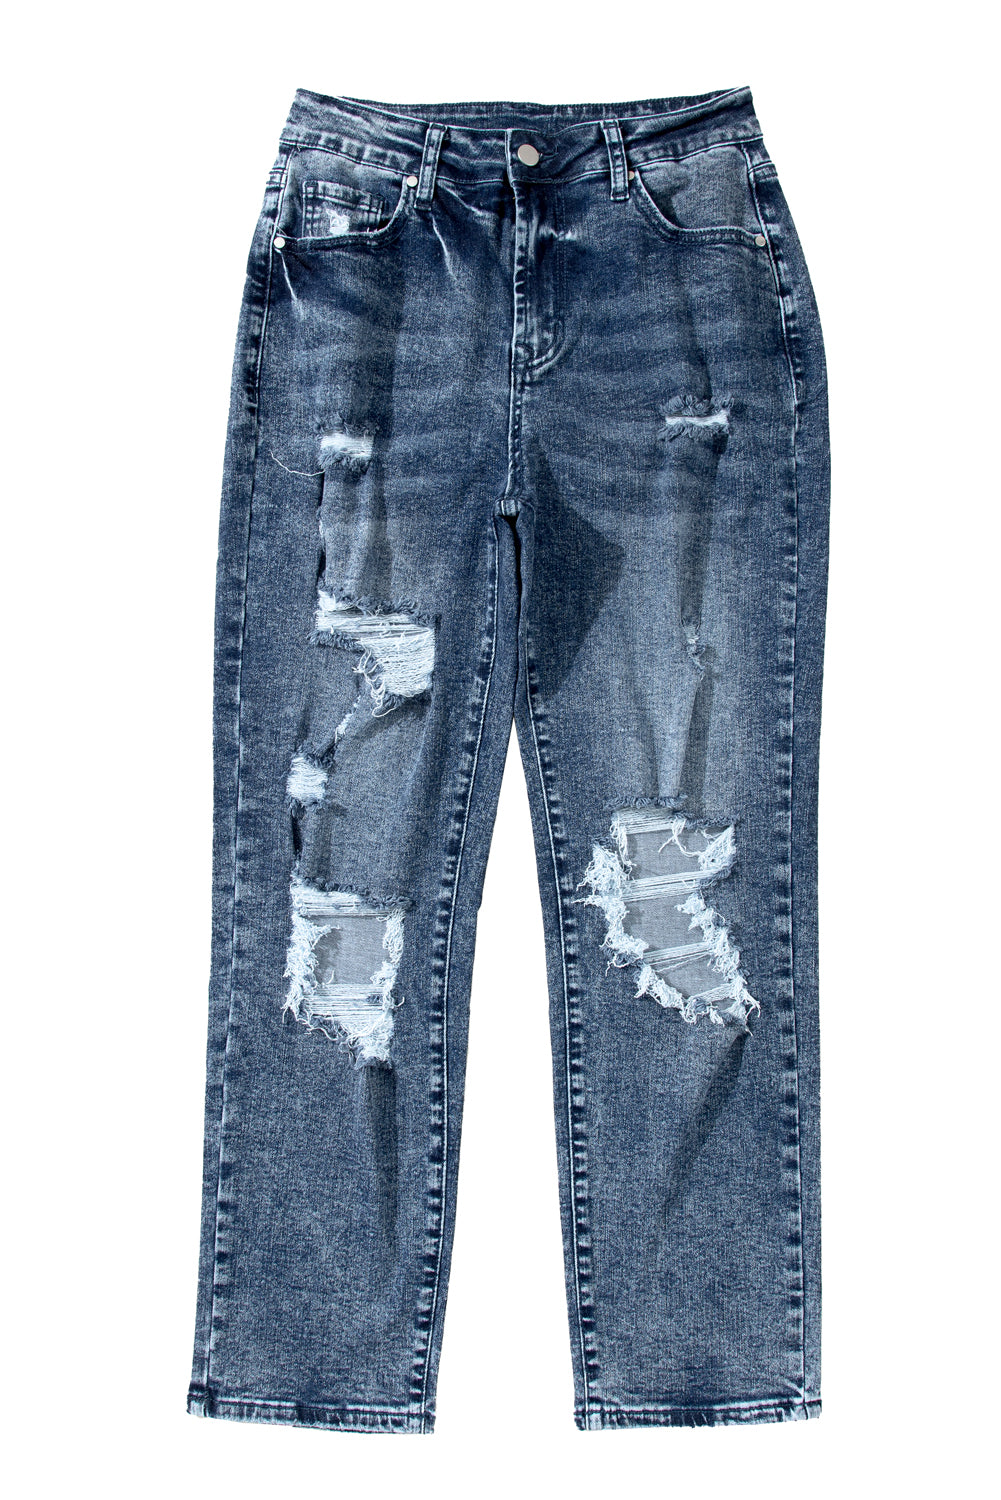 Navy Blue Light Wash Frayed Slim Fit High Waist Jeans - SELFTRITSS